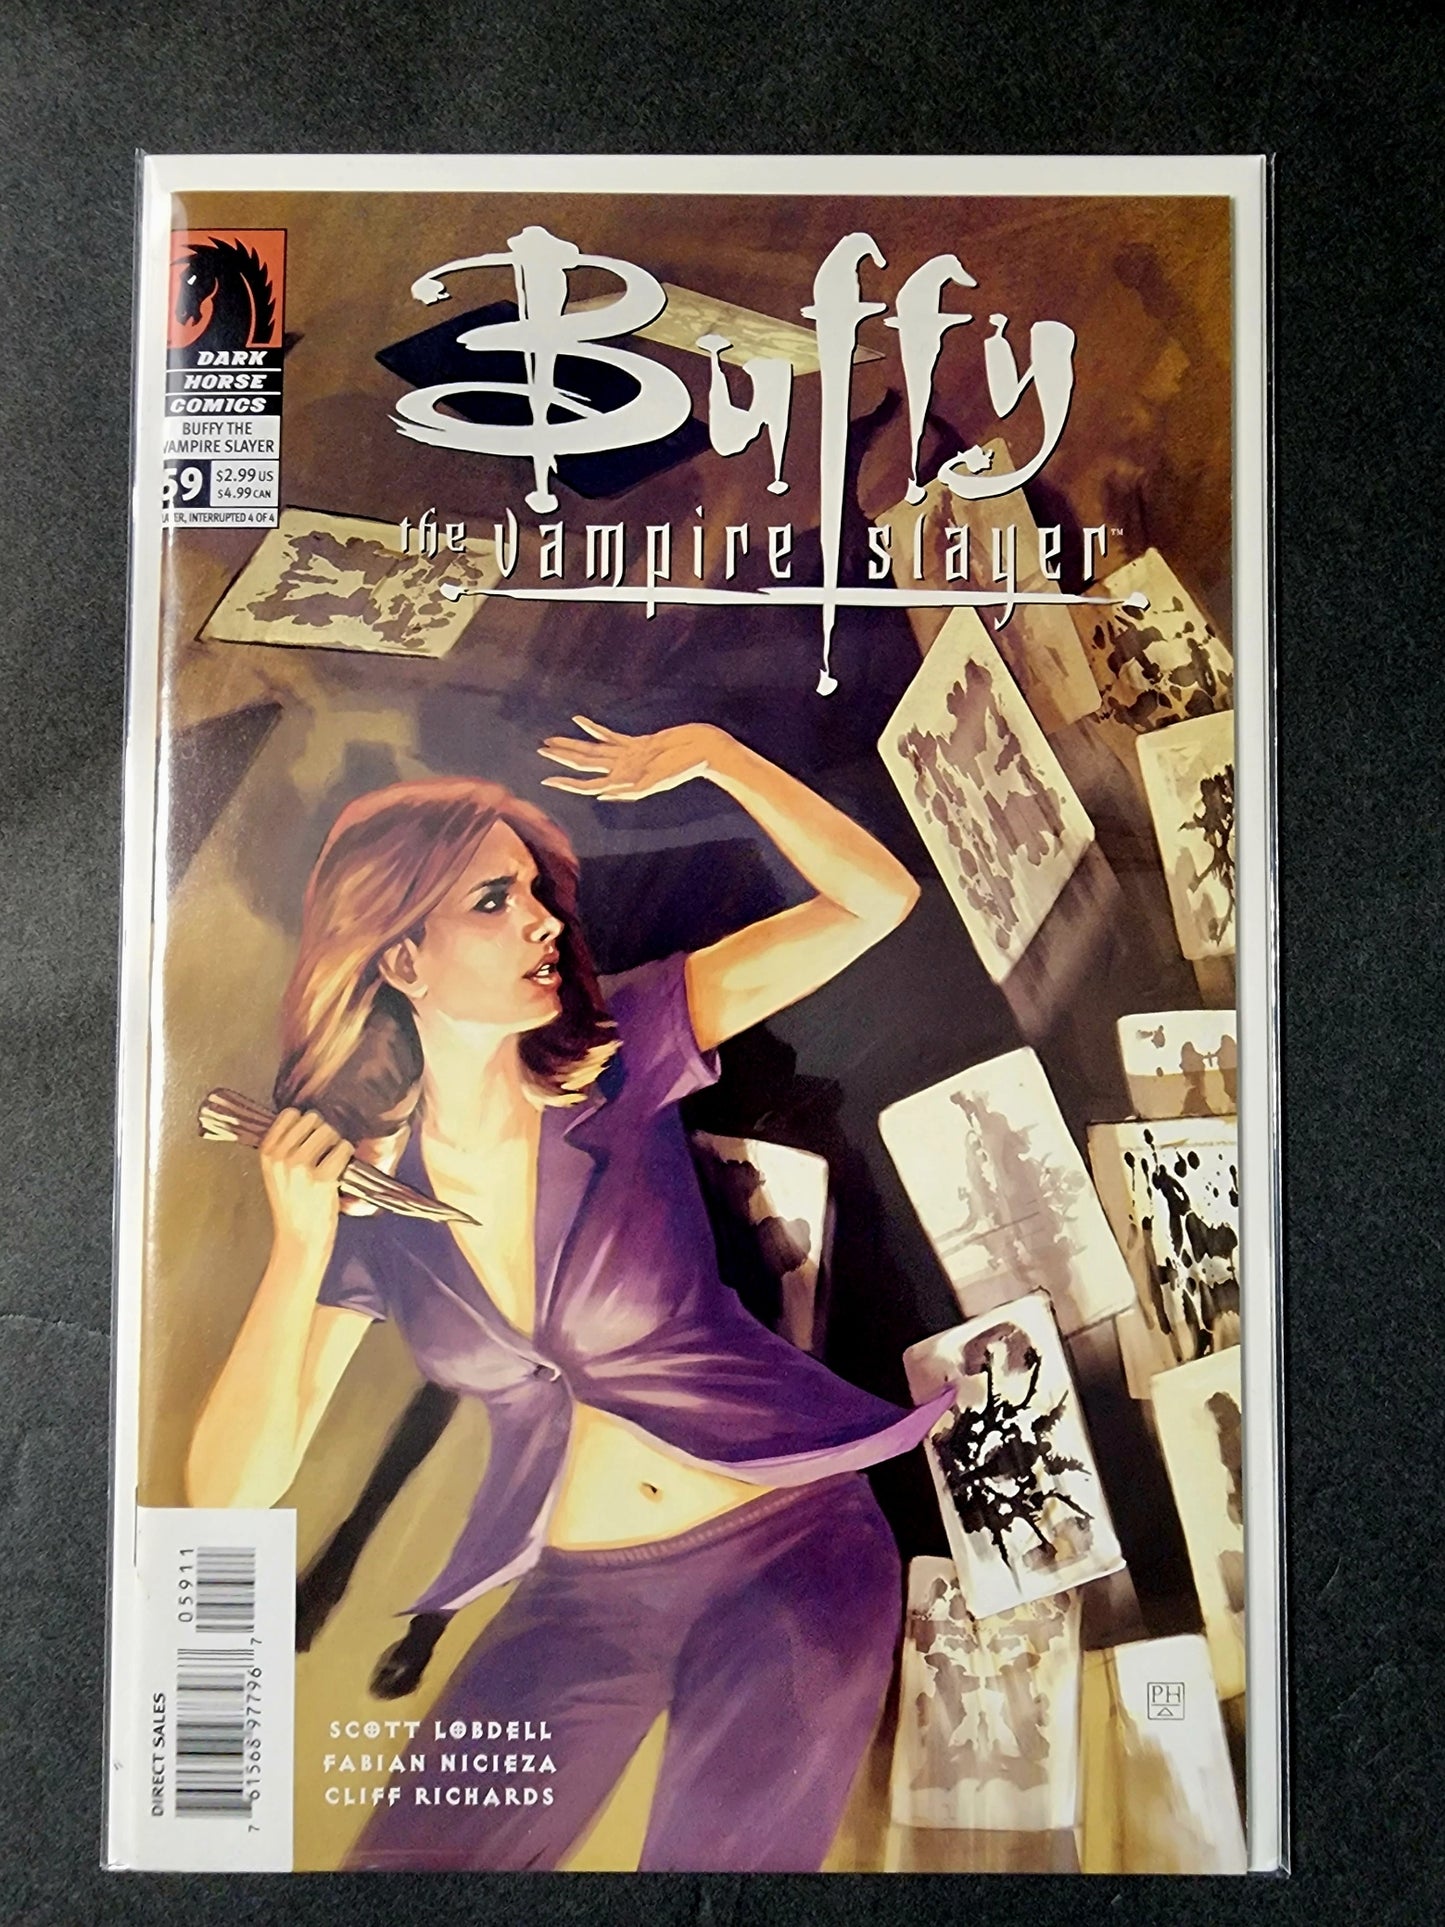 Buffy the Vampire Slayer #59 (NM-)